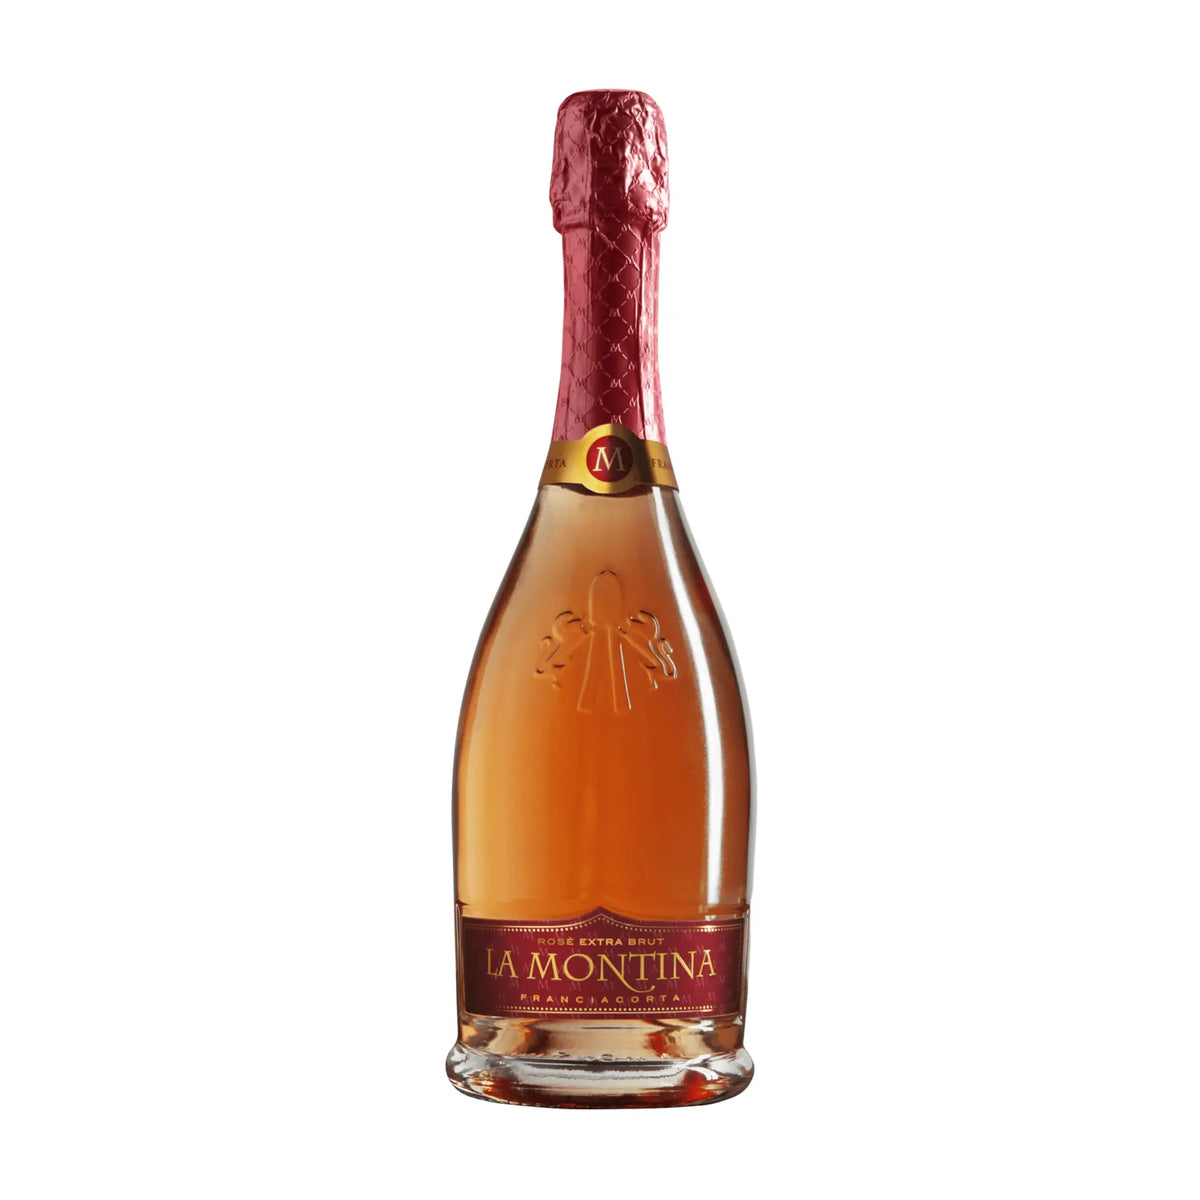 La Montina-Schaumwein-Schaumwein-Lombardei-Italien-Franciacorta DOCG Rosé Extra Brut-WINECOM